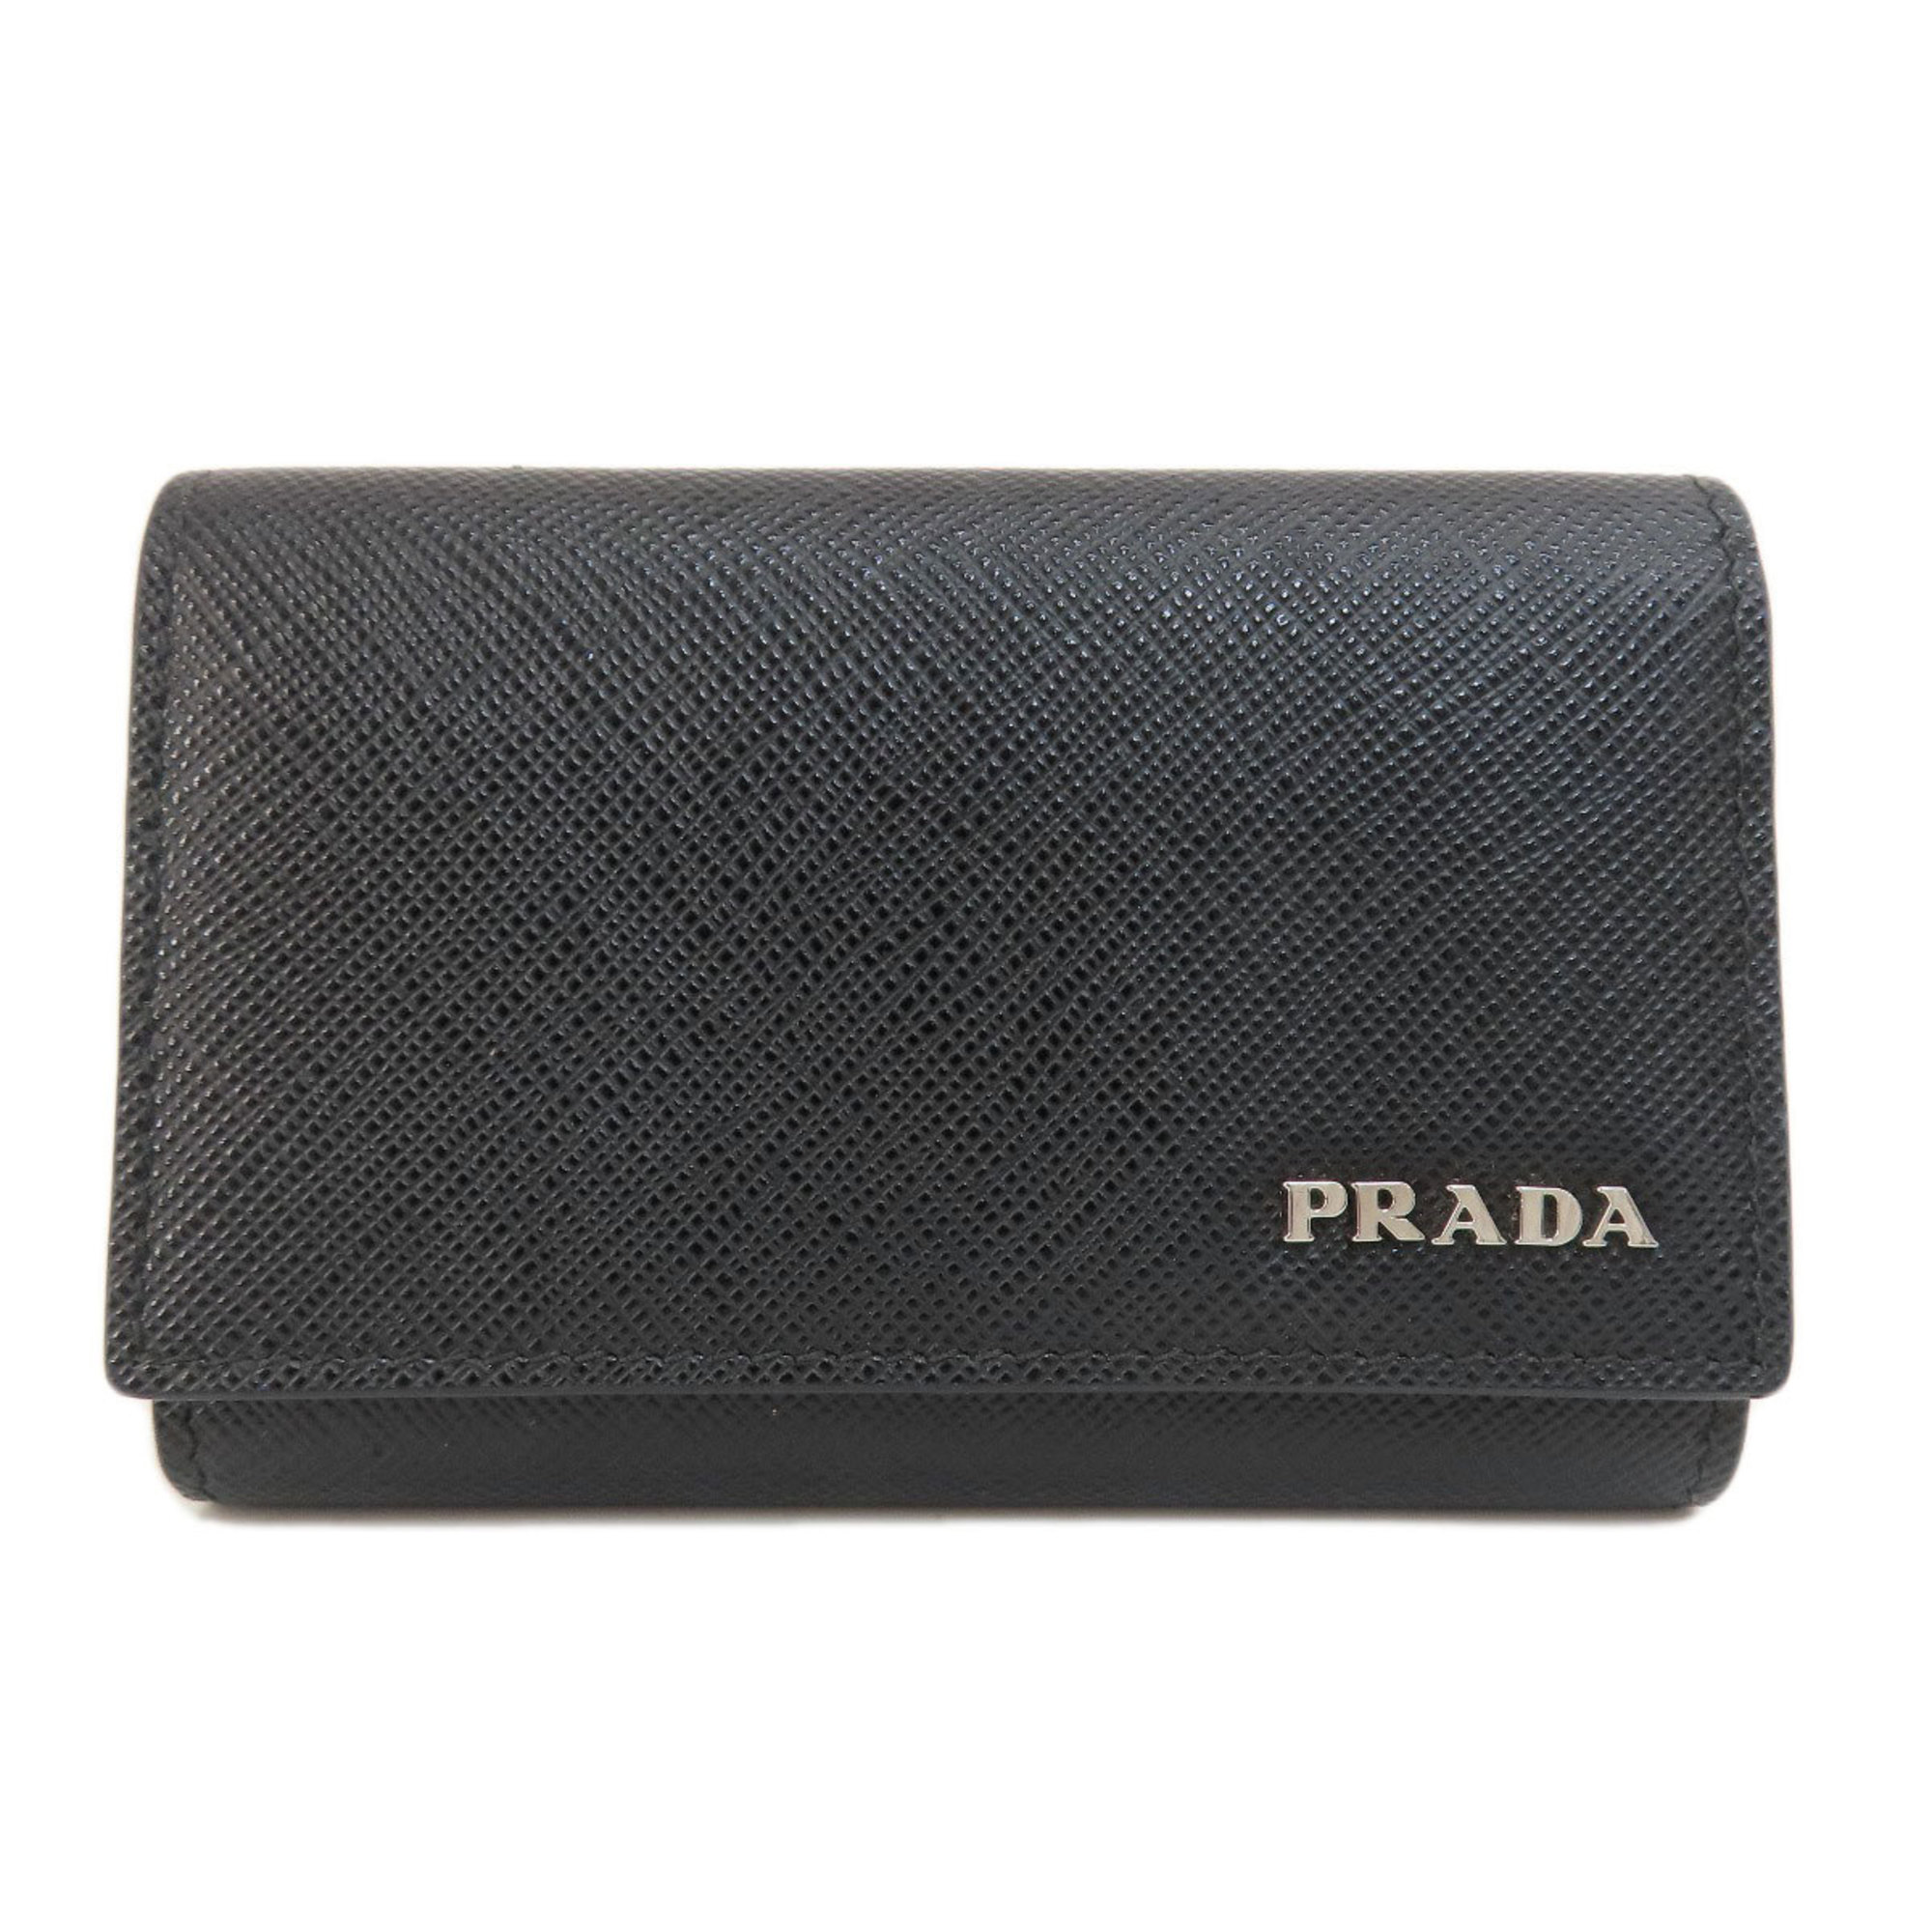 Prada Saffiano metal key case leather women's PRADA